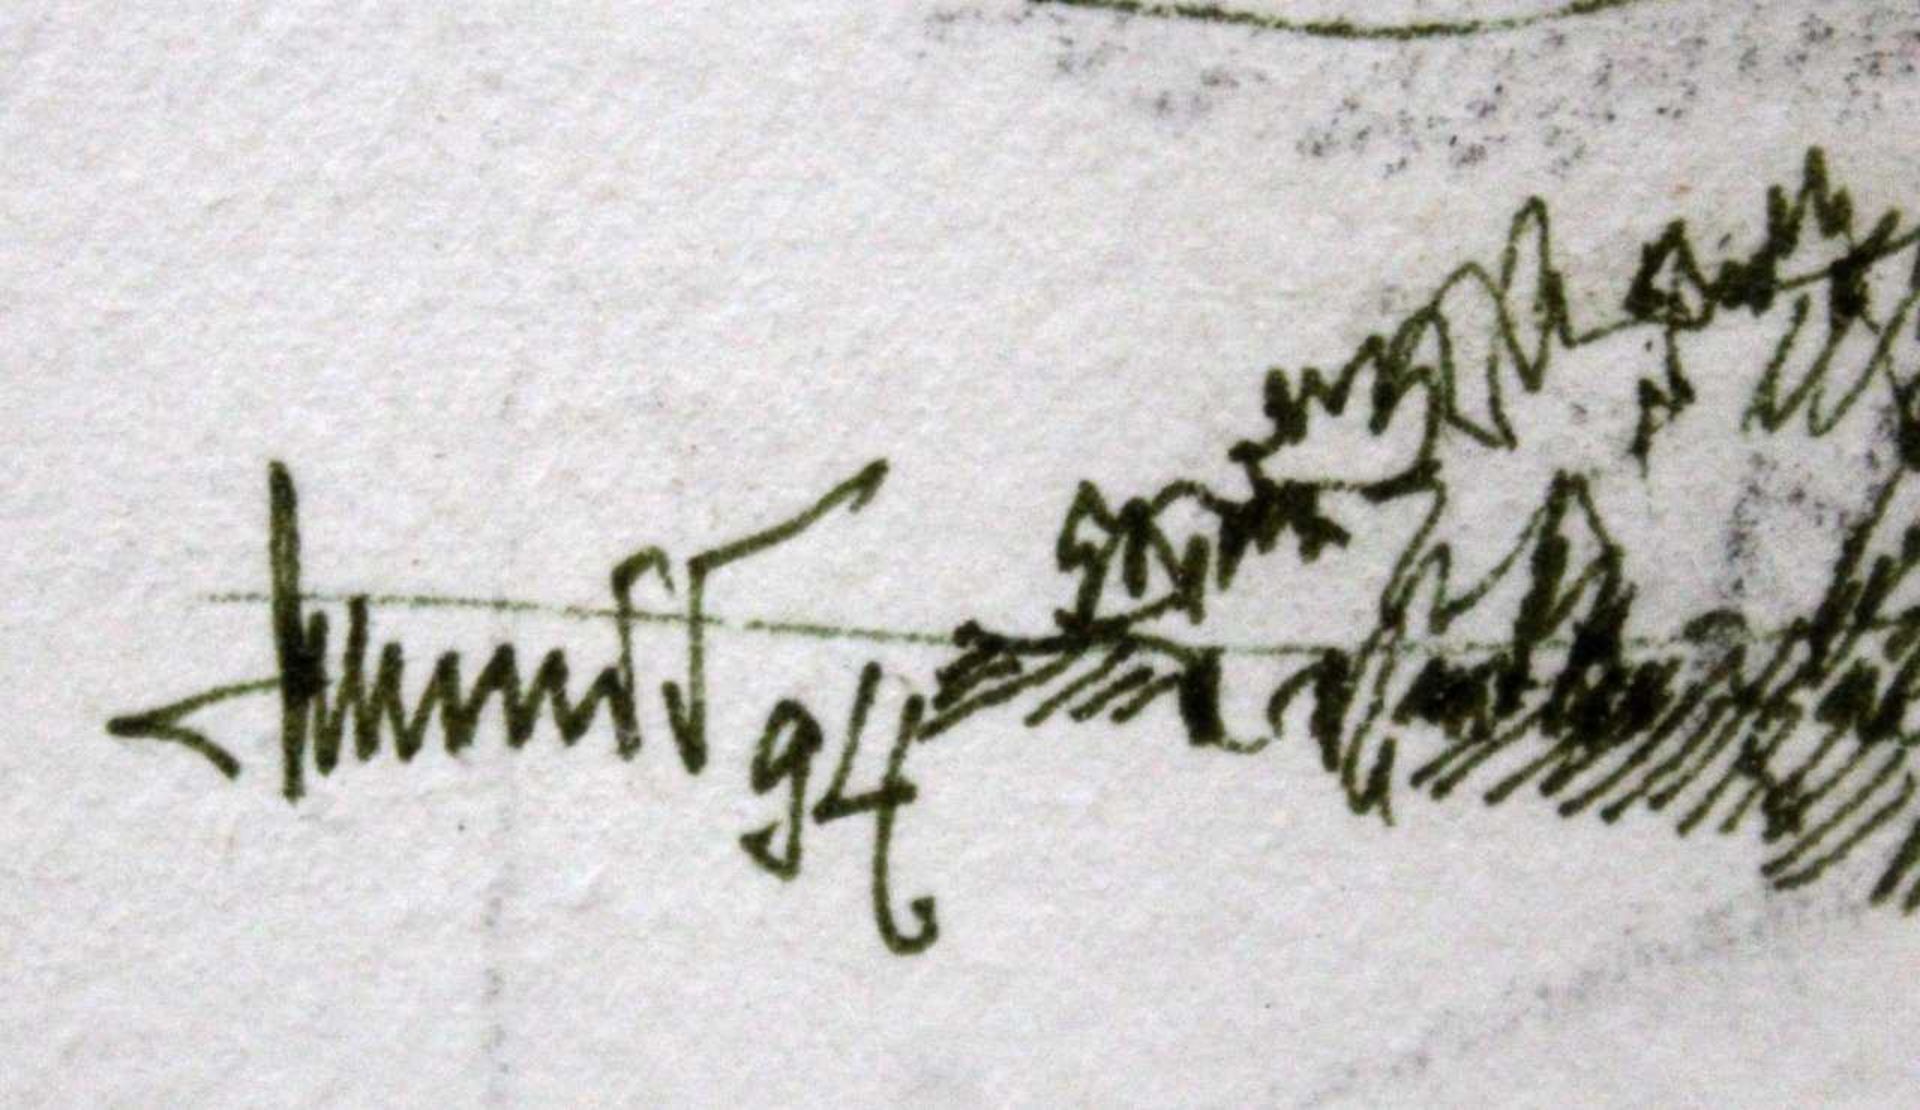 Aquarell "Stadtansicht Eger" Blick vom Fluss zur Burg und Kirche, signiert "Schmid", datiert 94. - Bild 3 aus 3